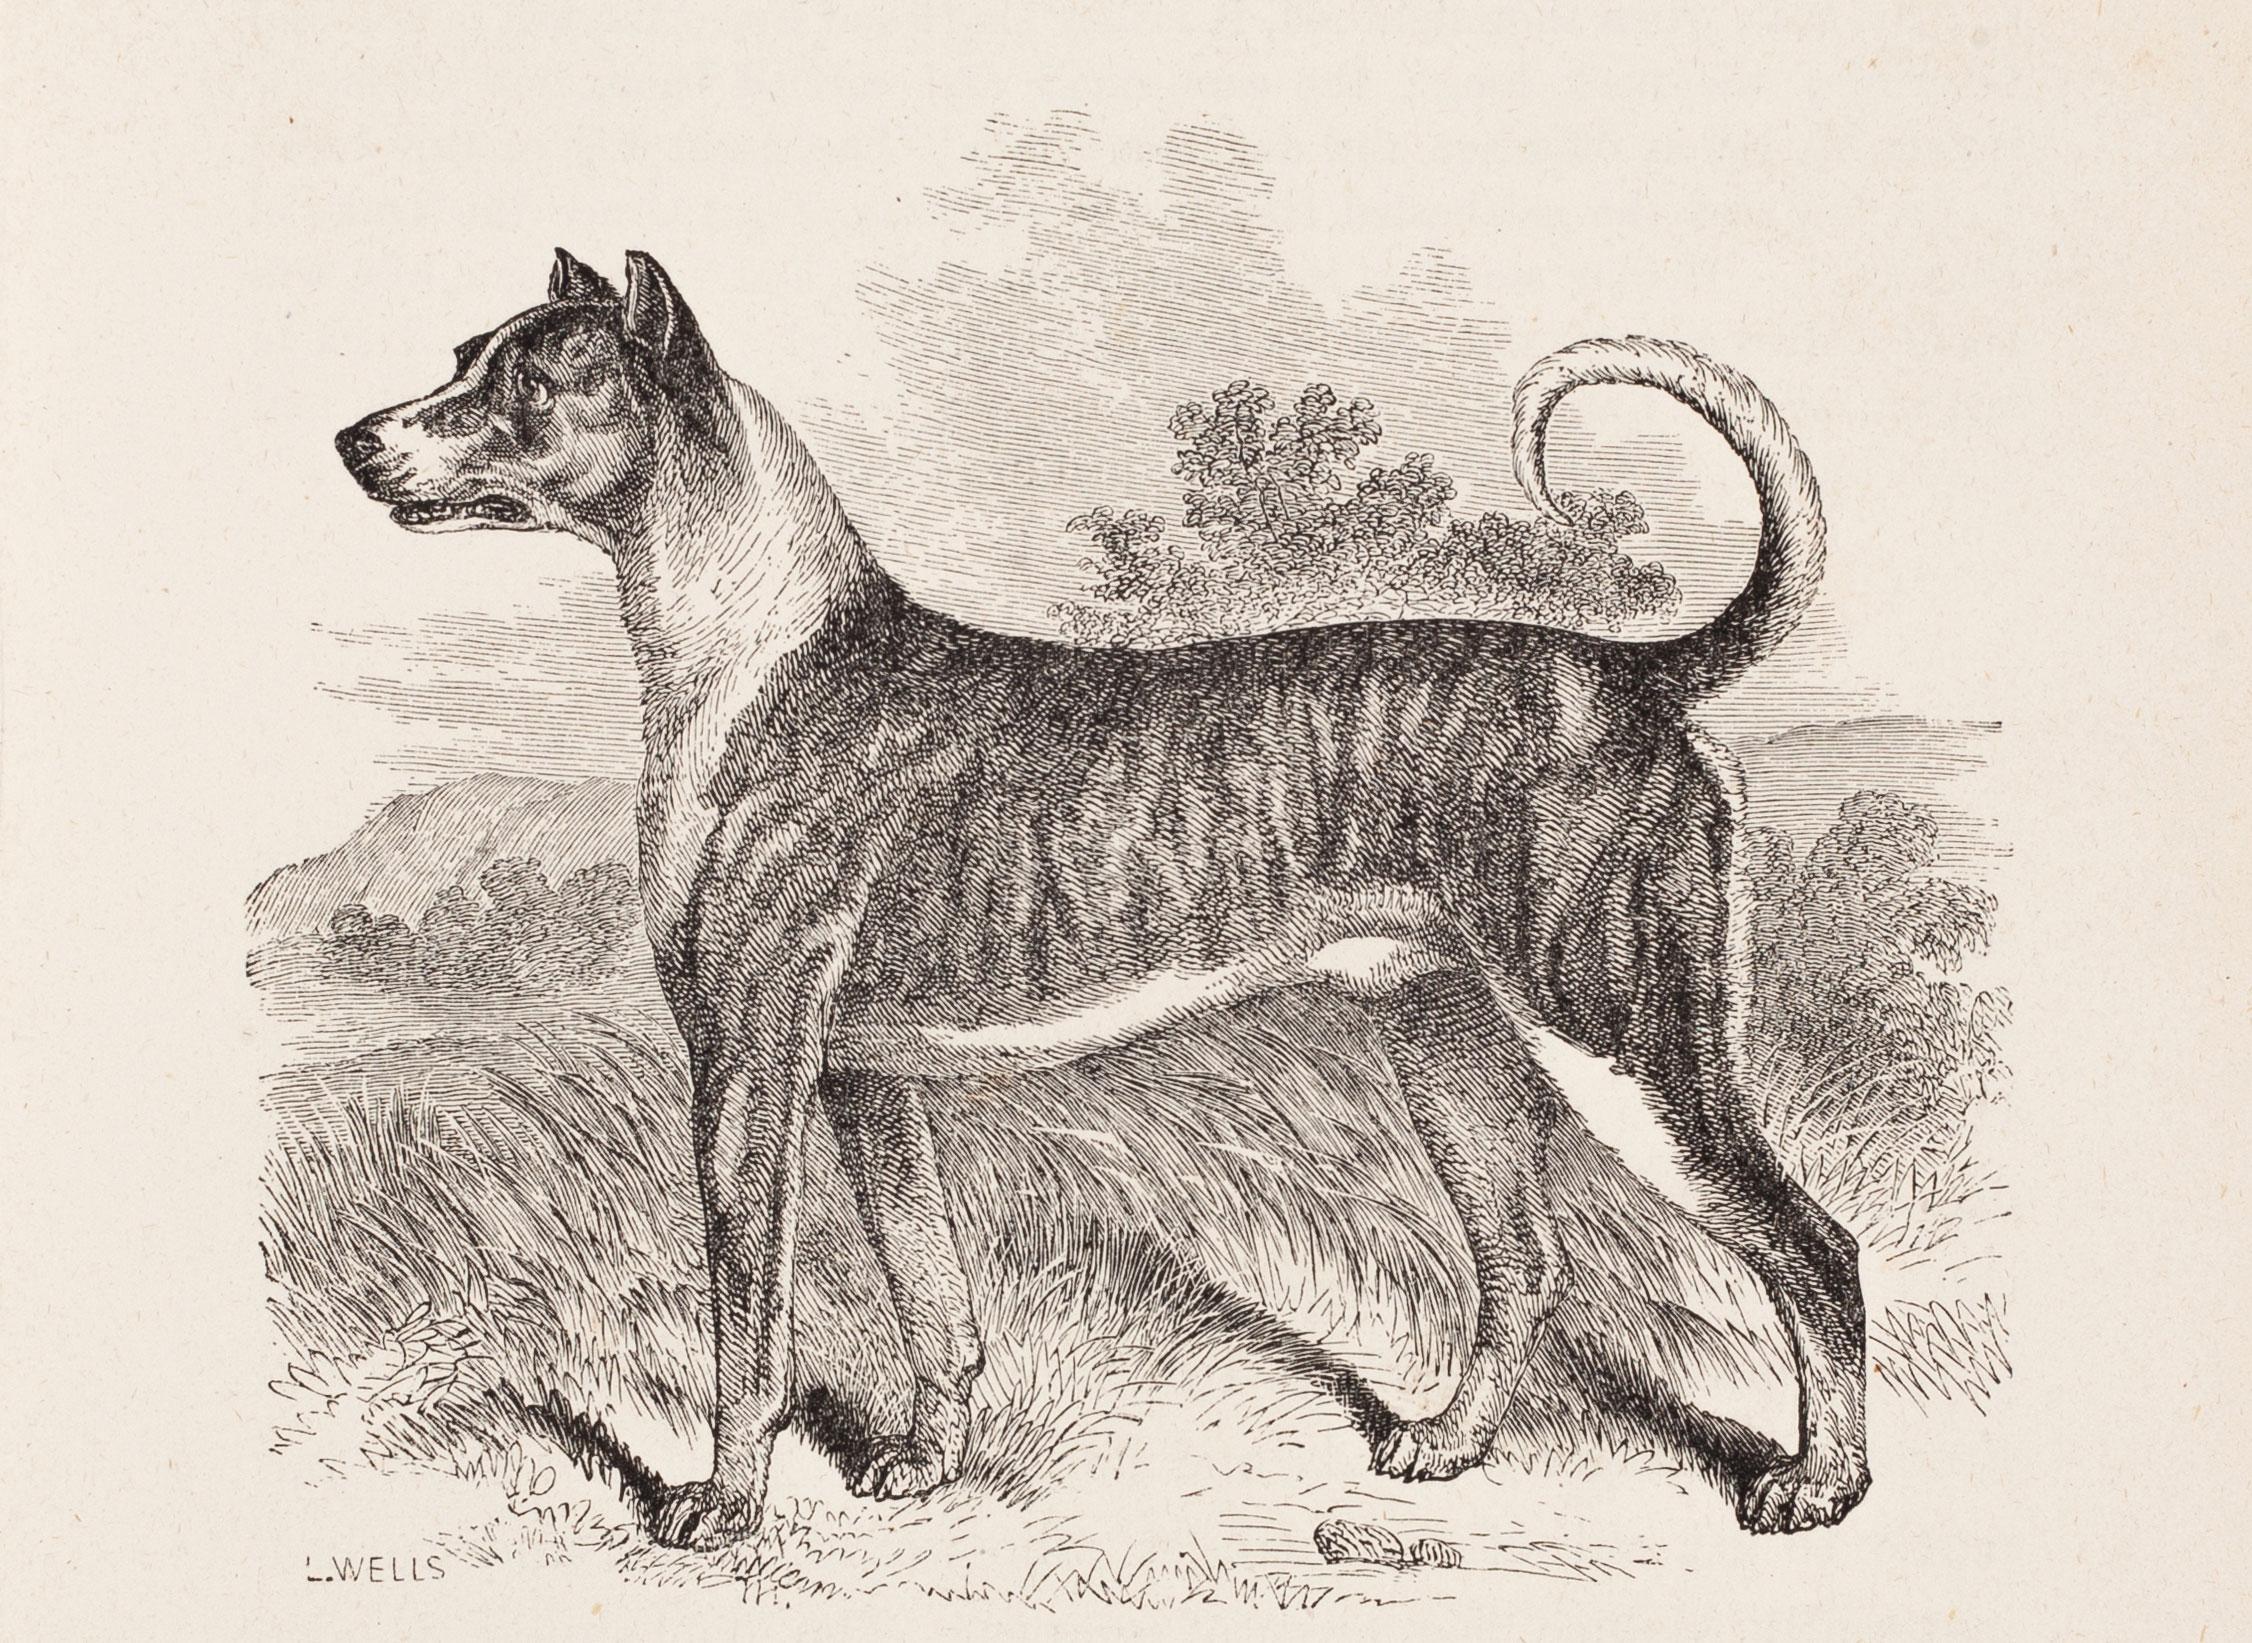 L. Wells Animal Print - The Boarhound